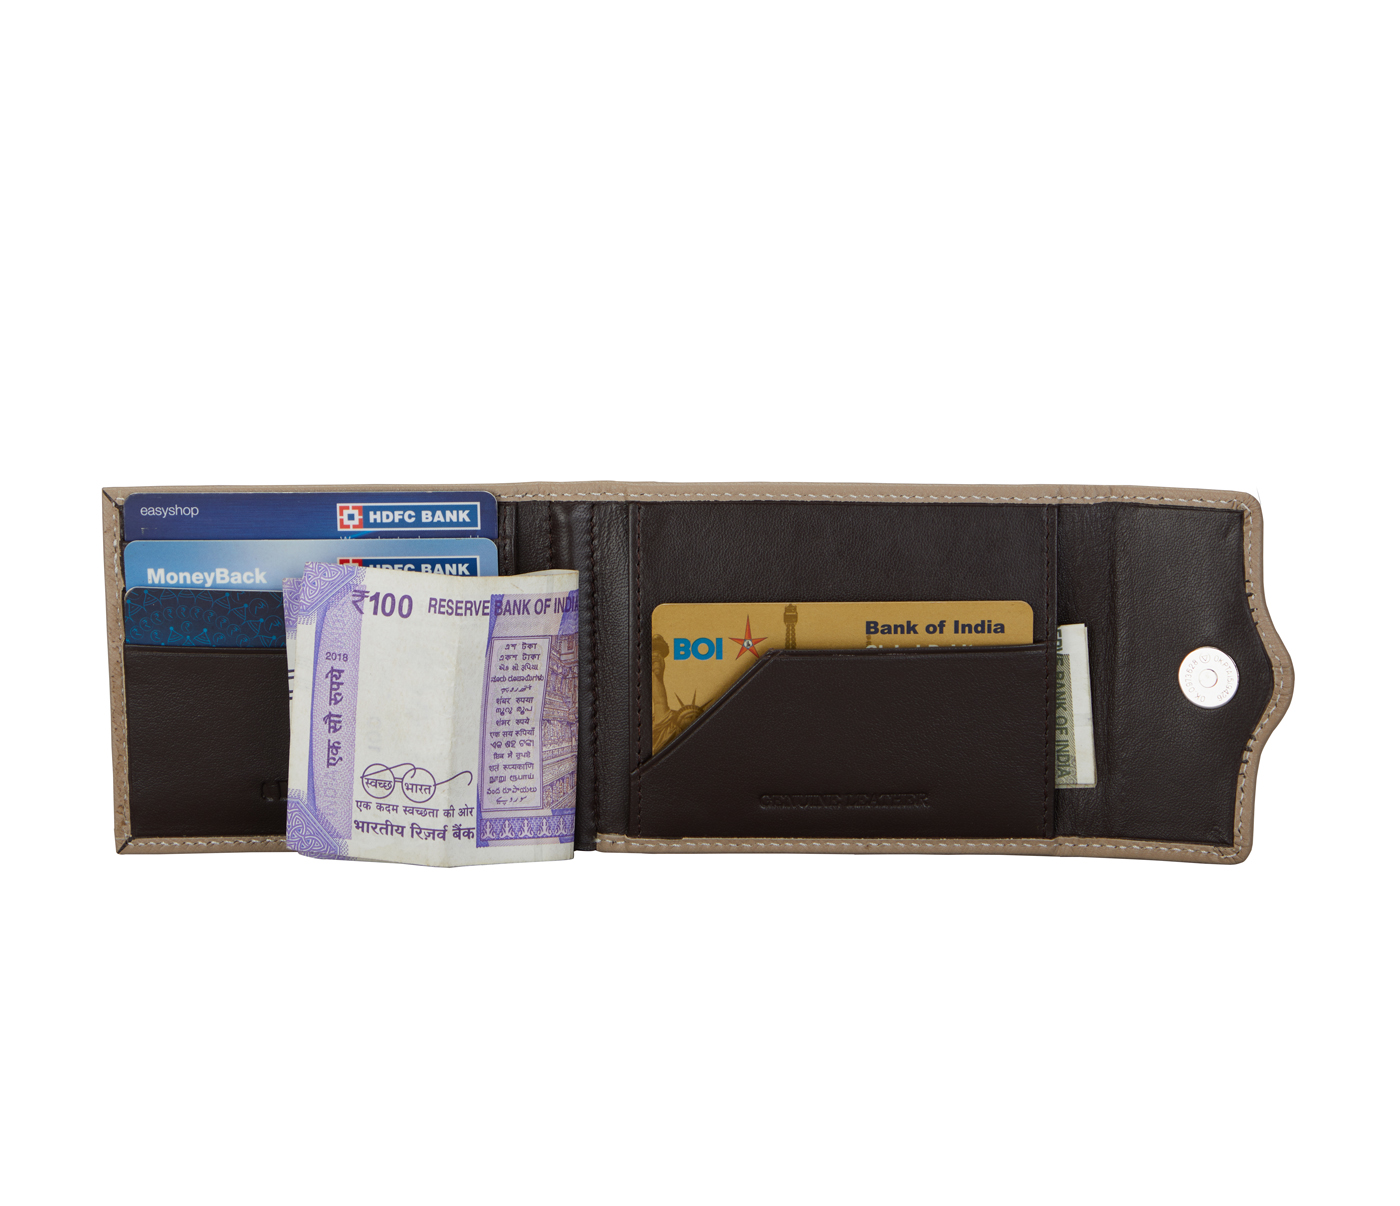 W328-Noah-Men's bifold money clip wallet in Genuine Leather - Tope